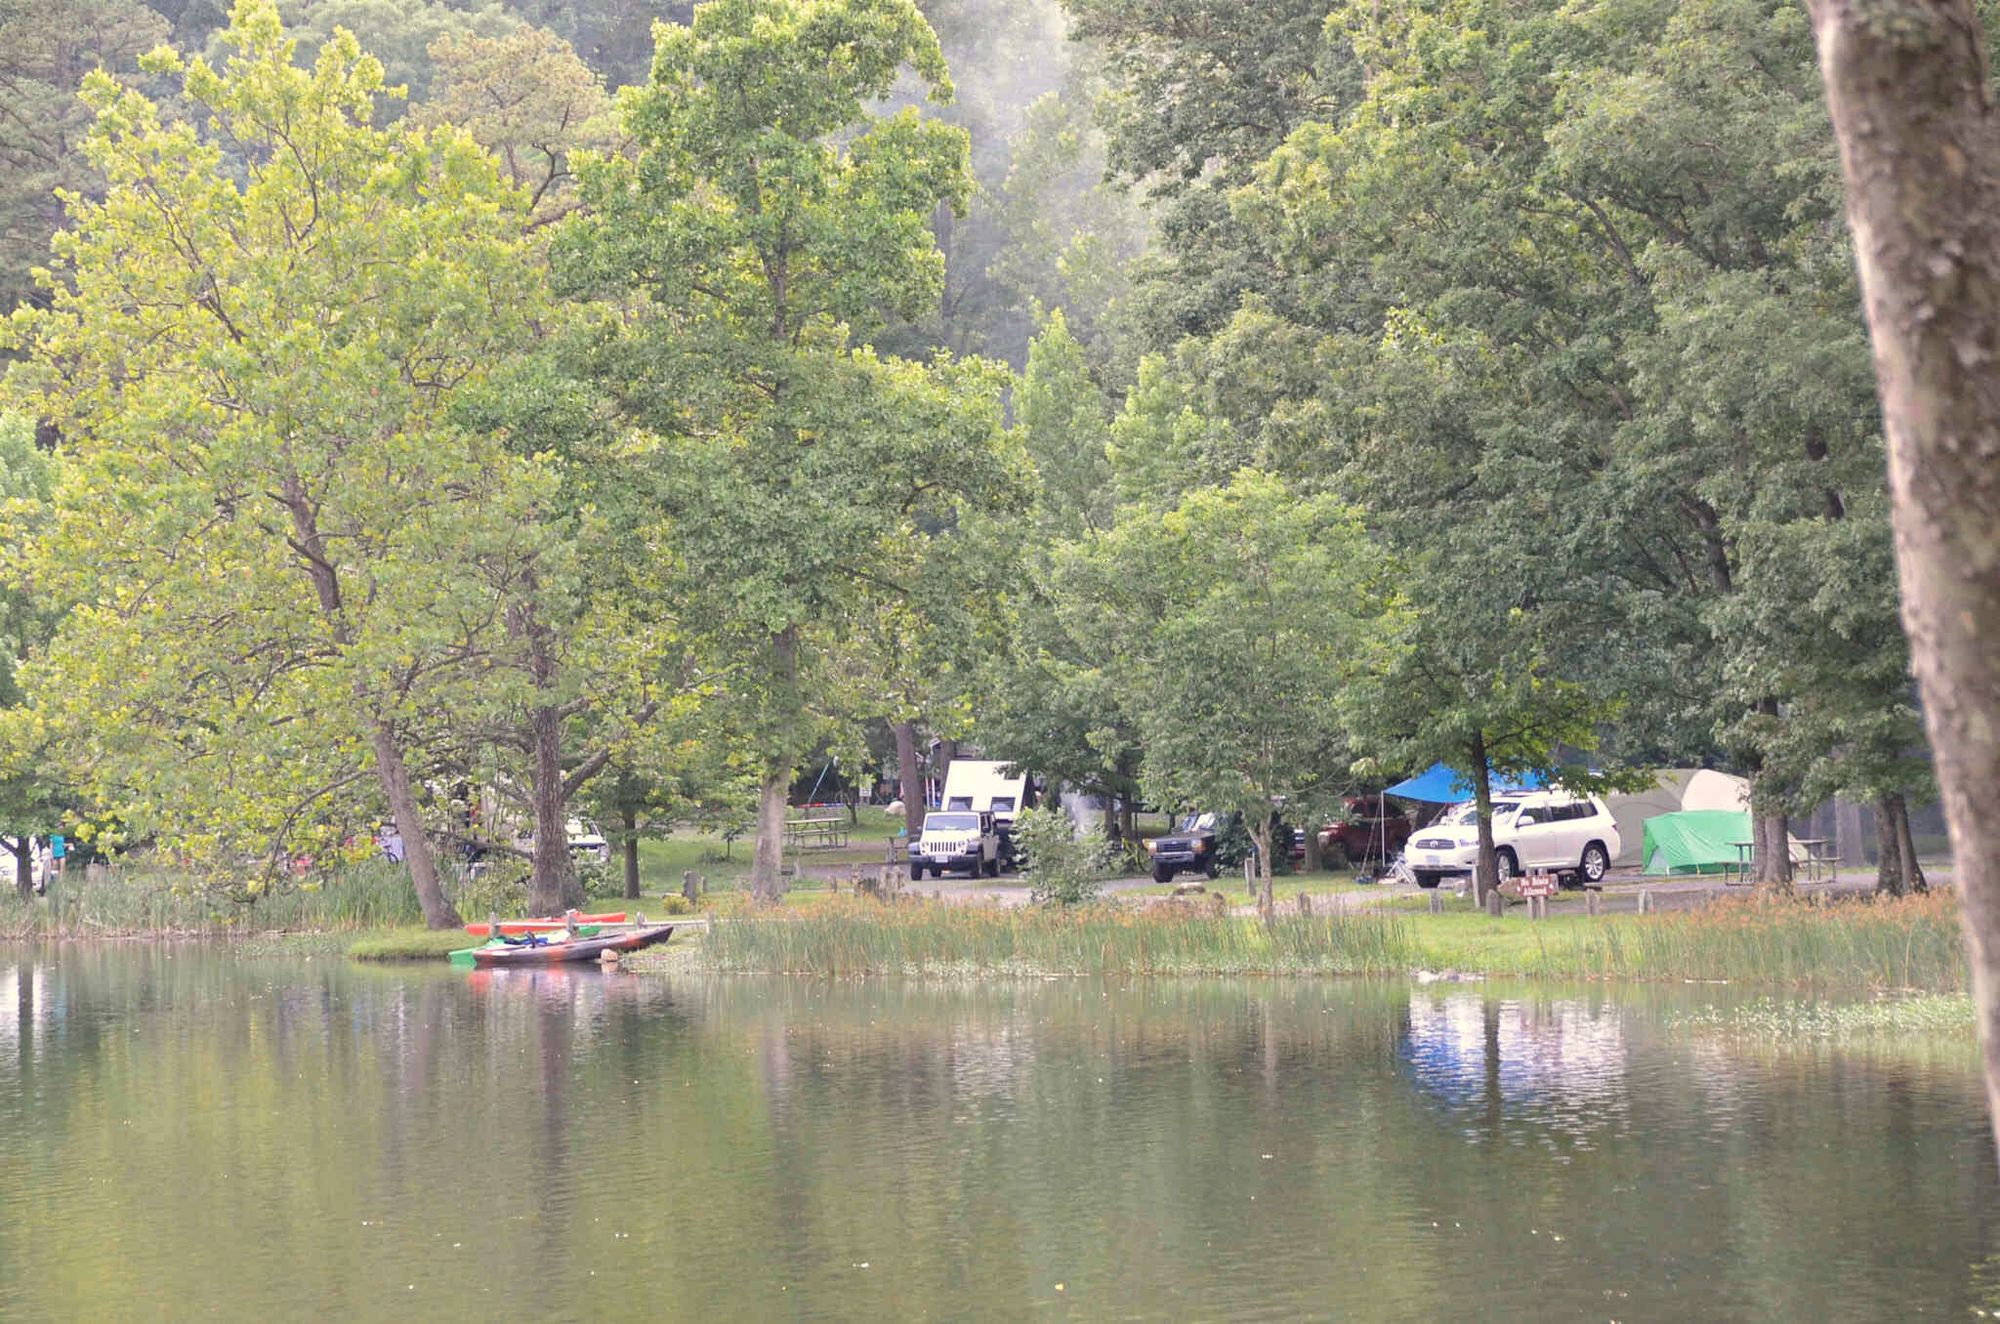 Camper car rentals and campgrounds